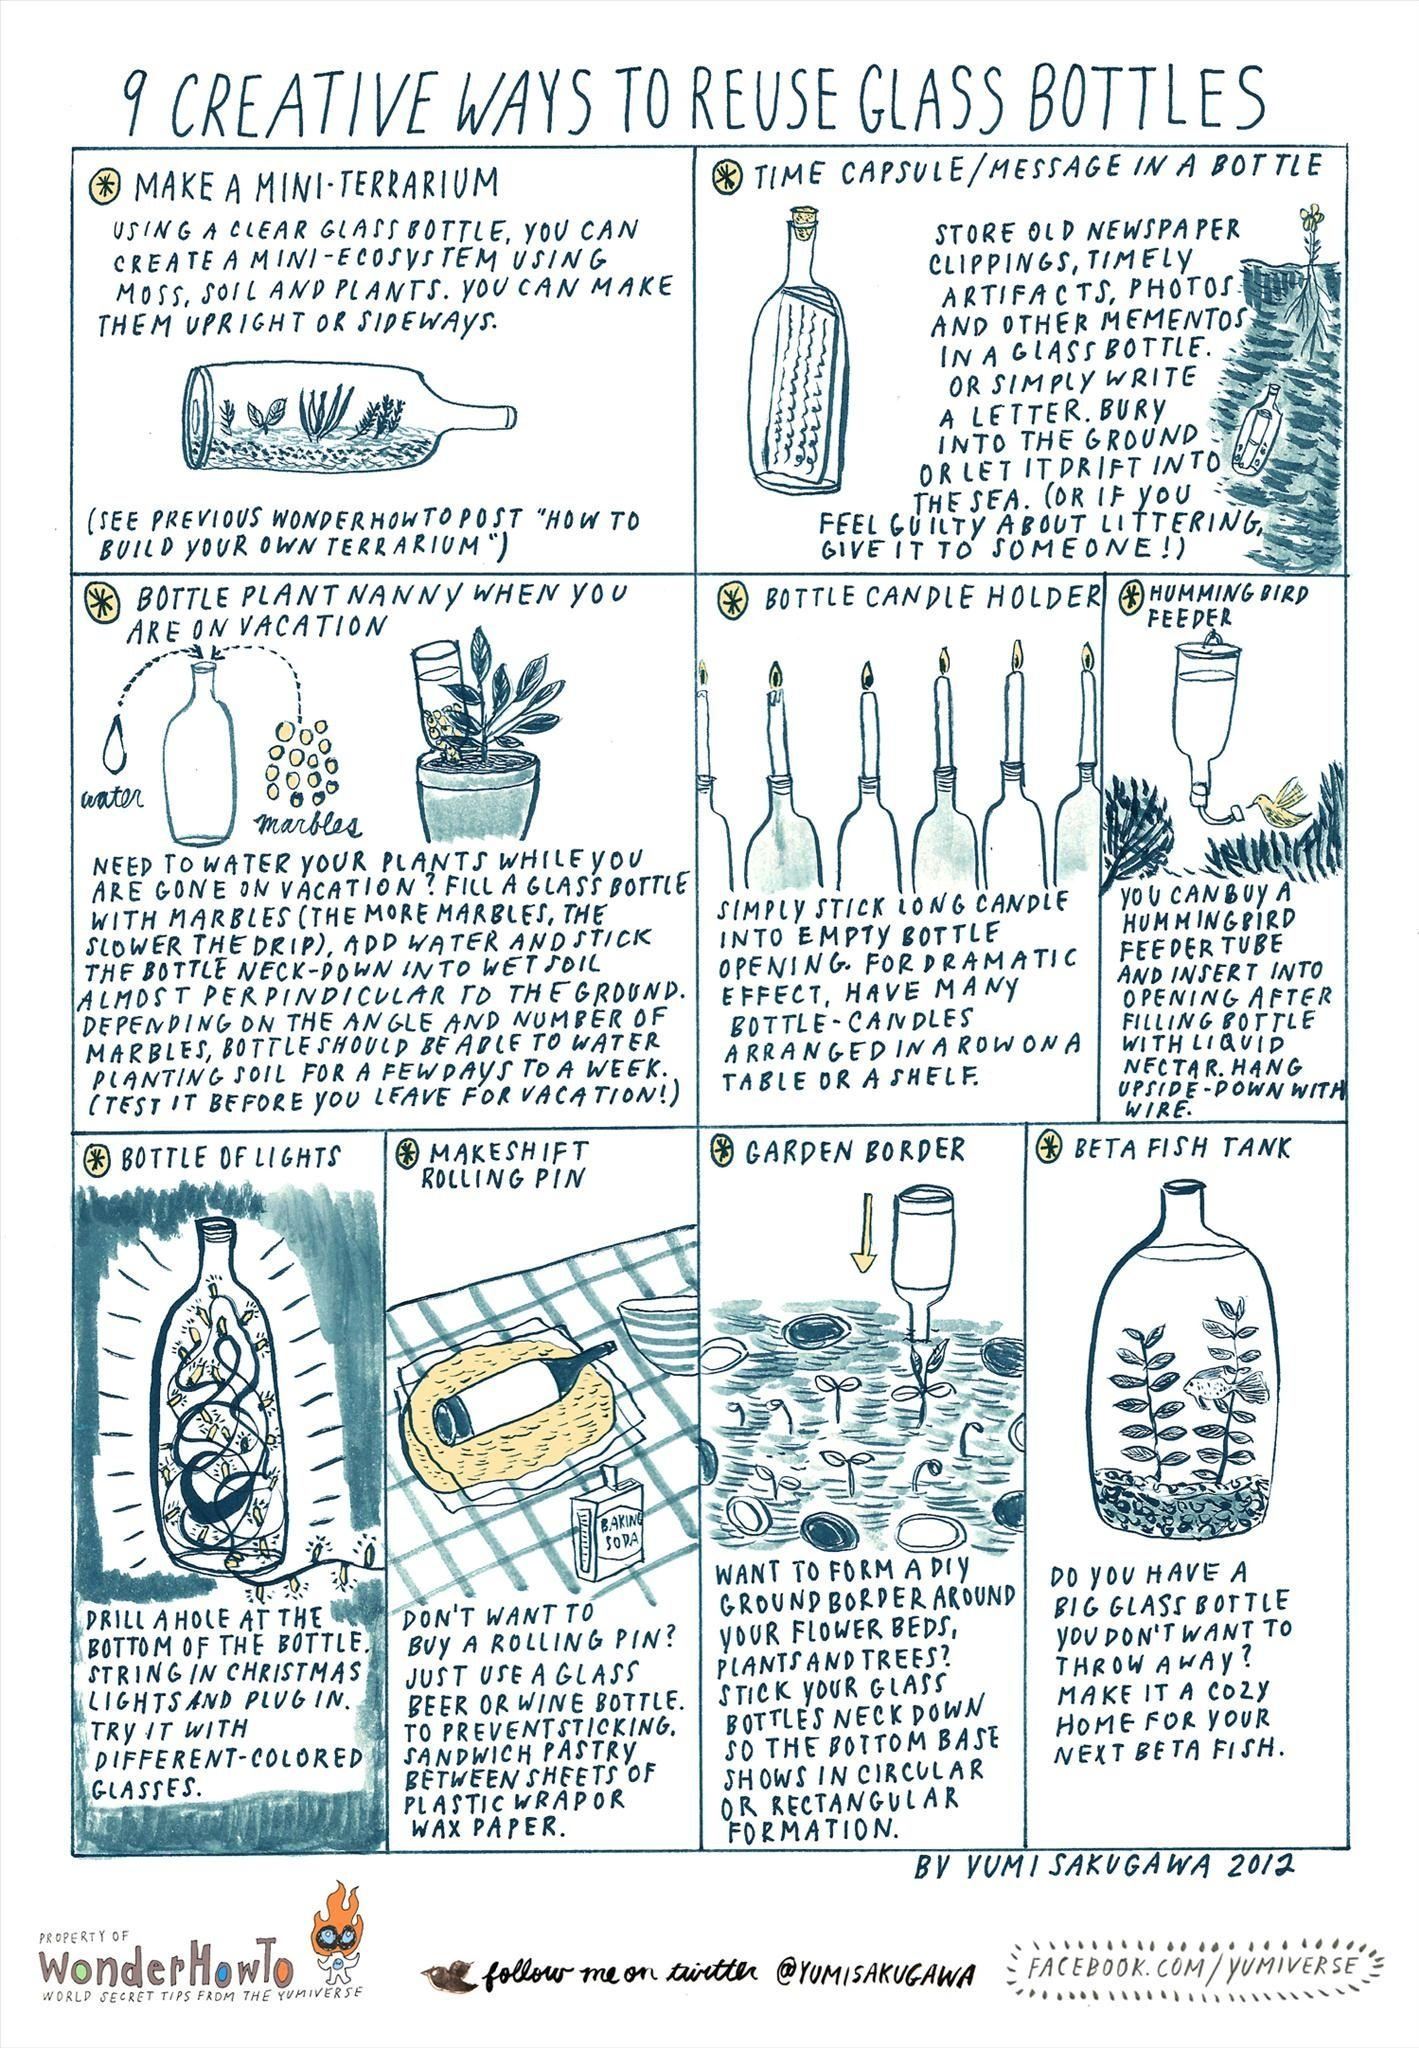 9 Creative Ways to Reuse Glass Bottles